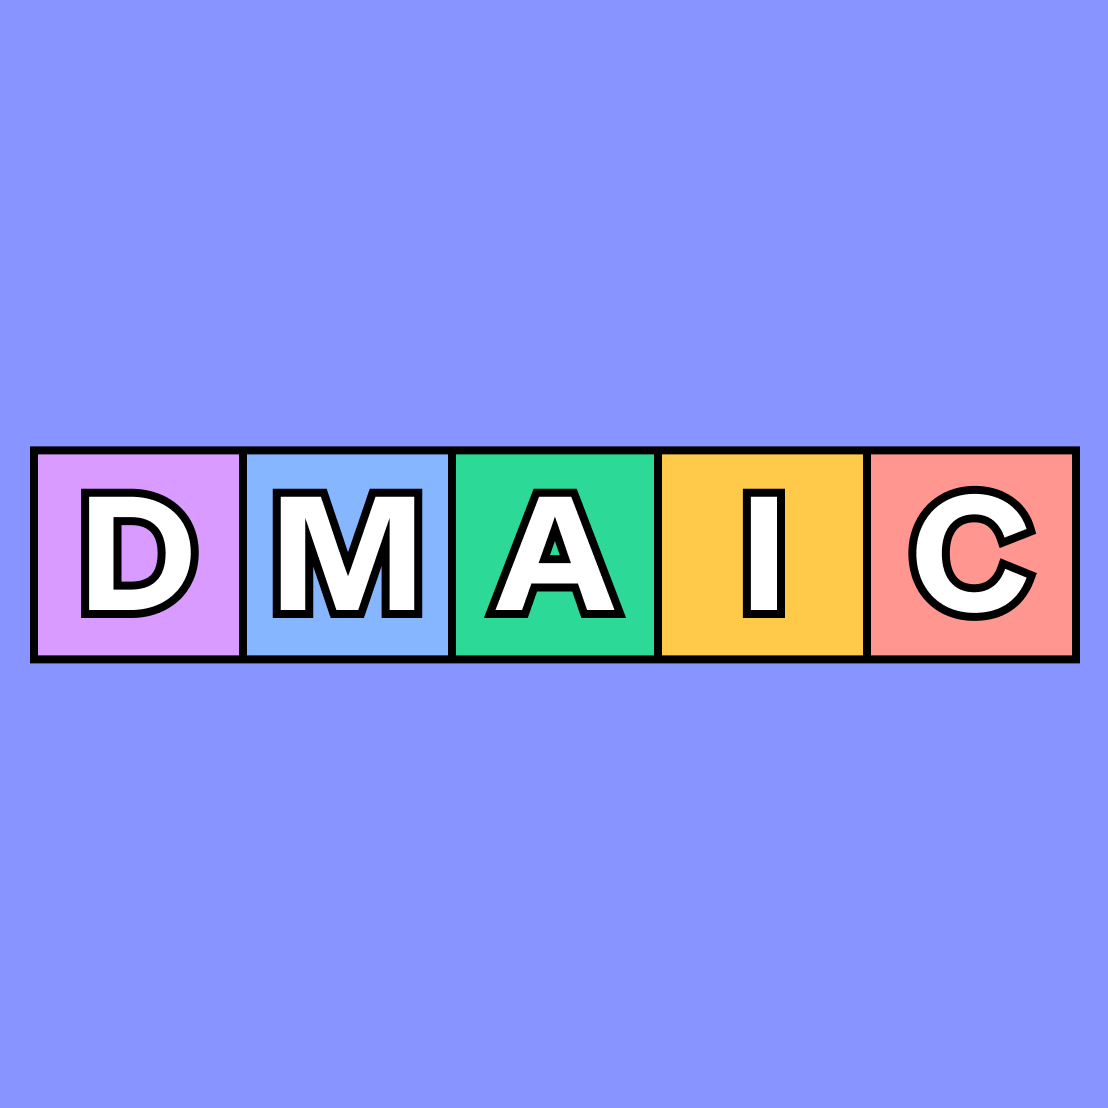 dmaic-template-free-six-sigma-tool-figjam